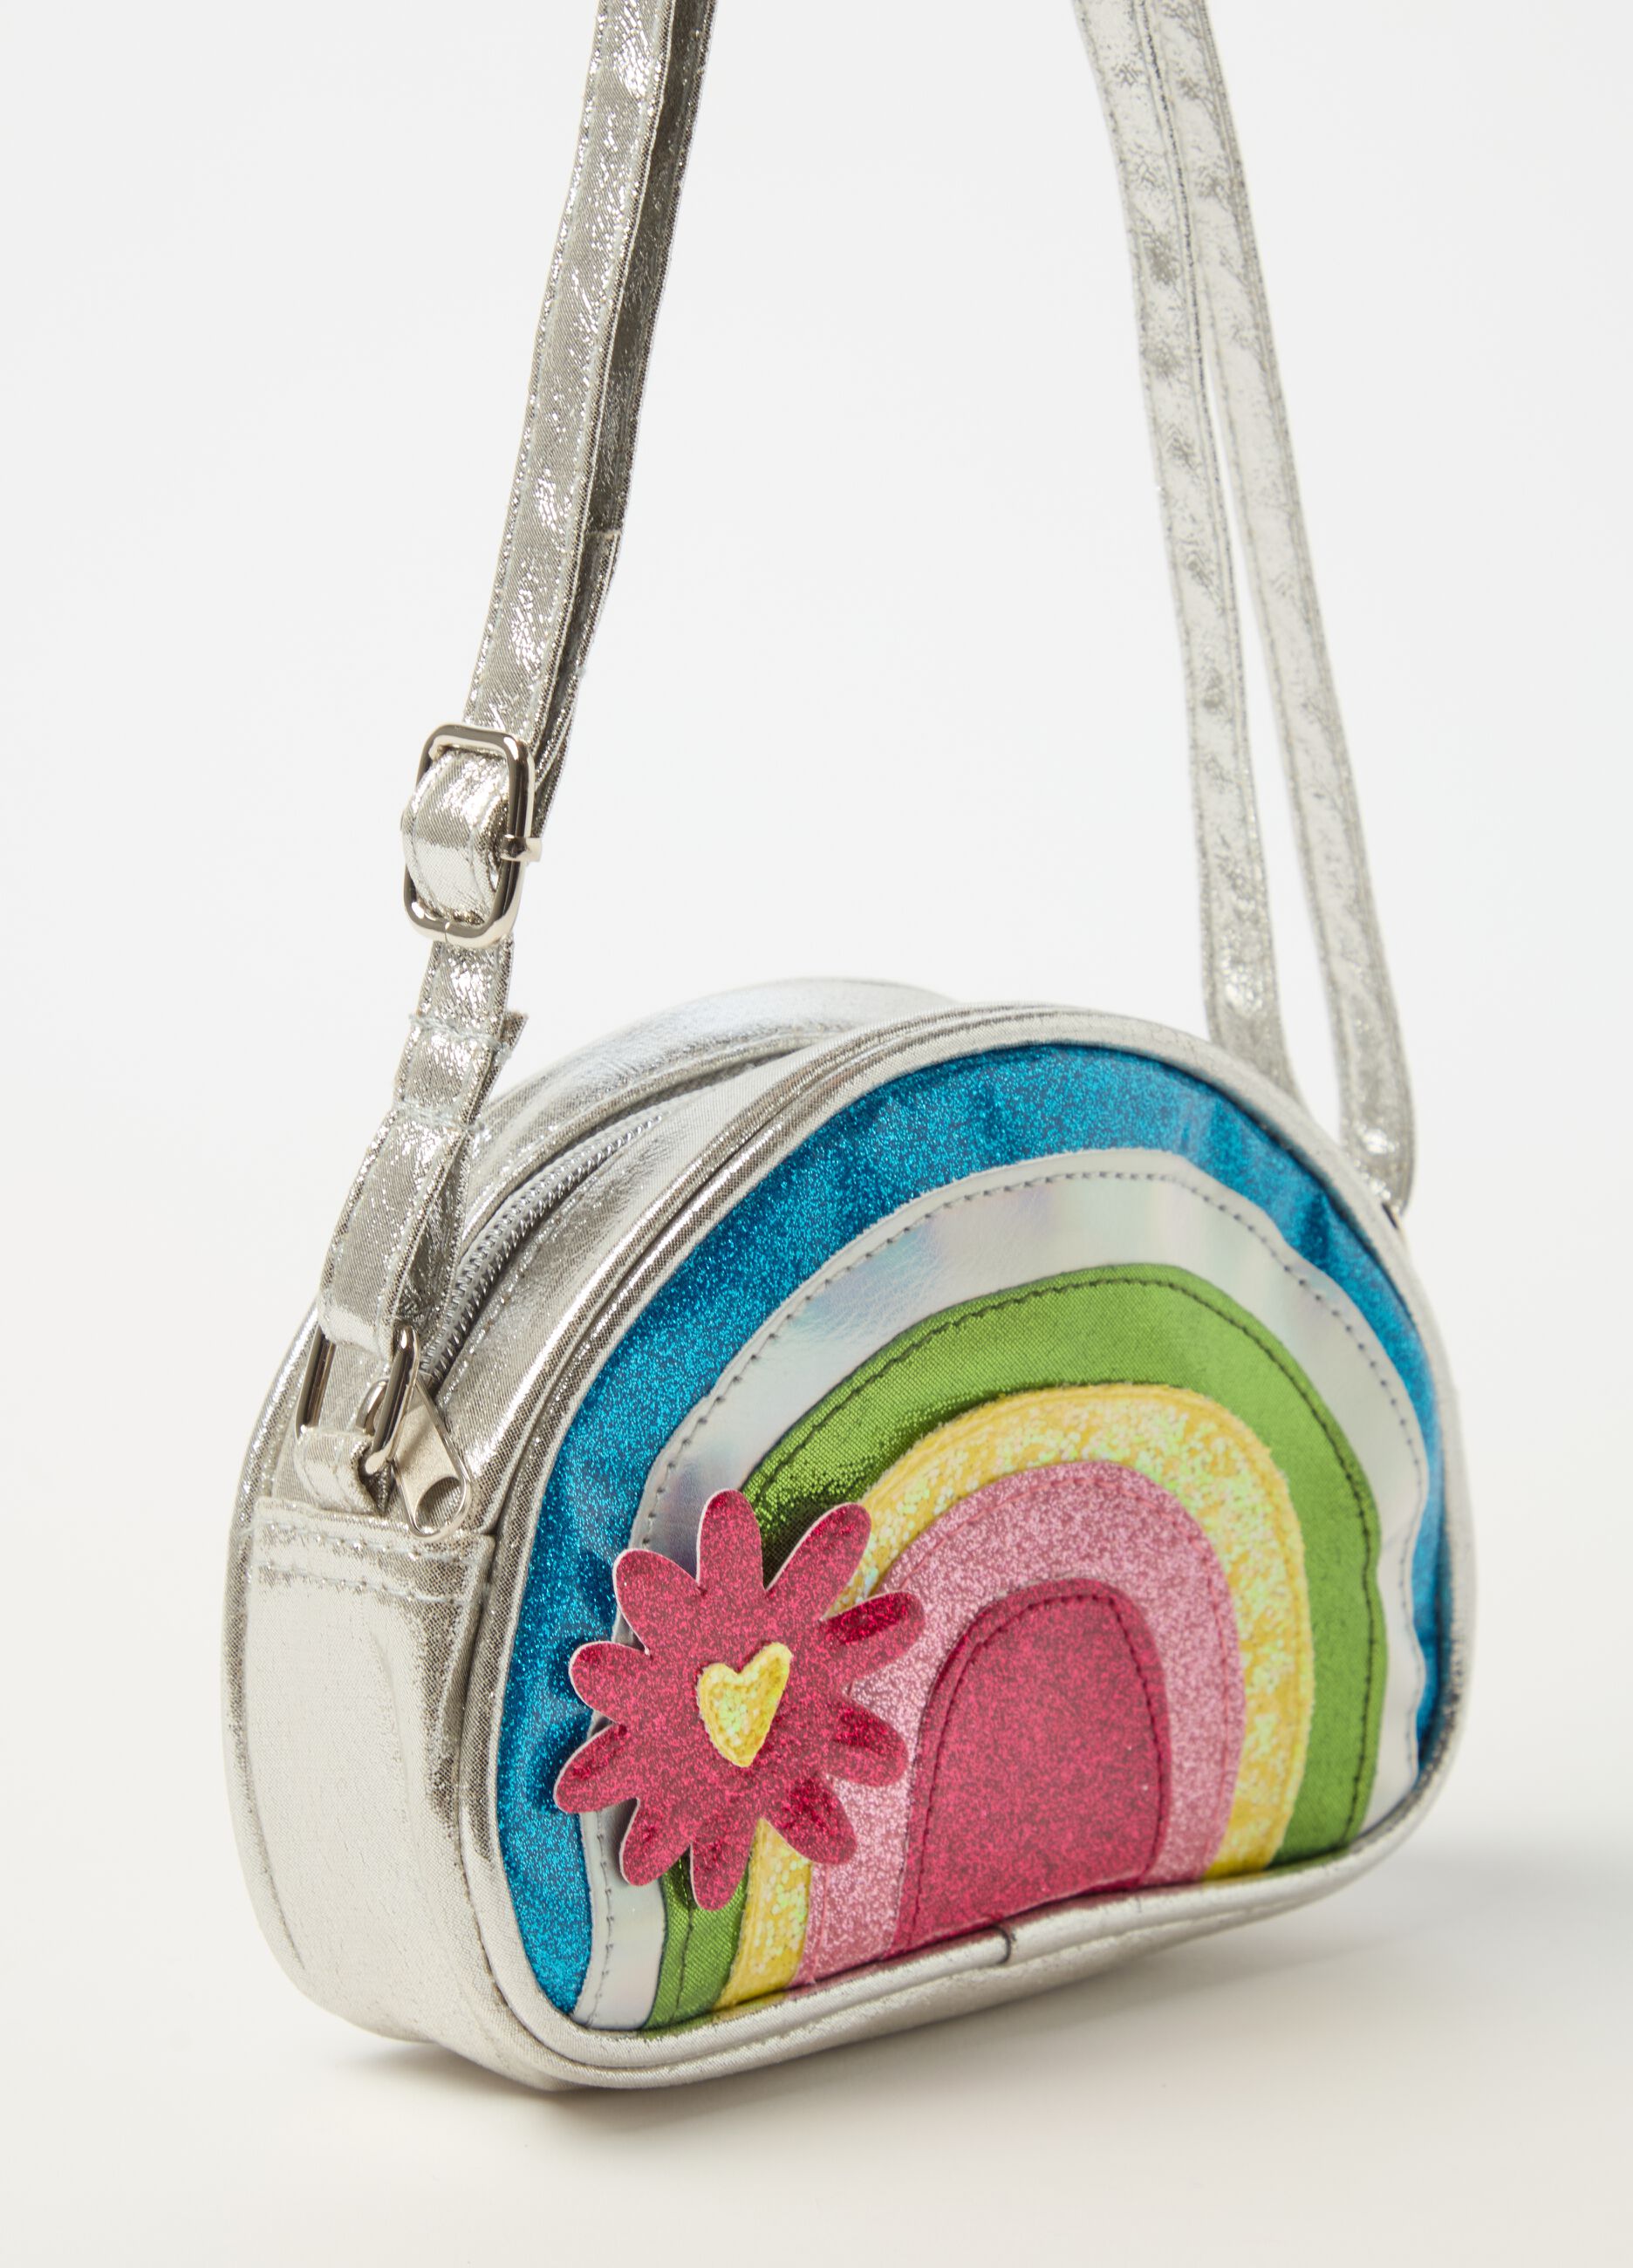 Bag with glitter rainbow pattern